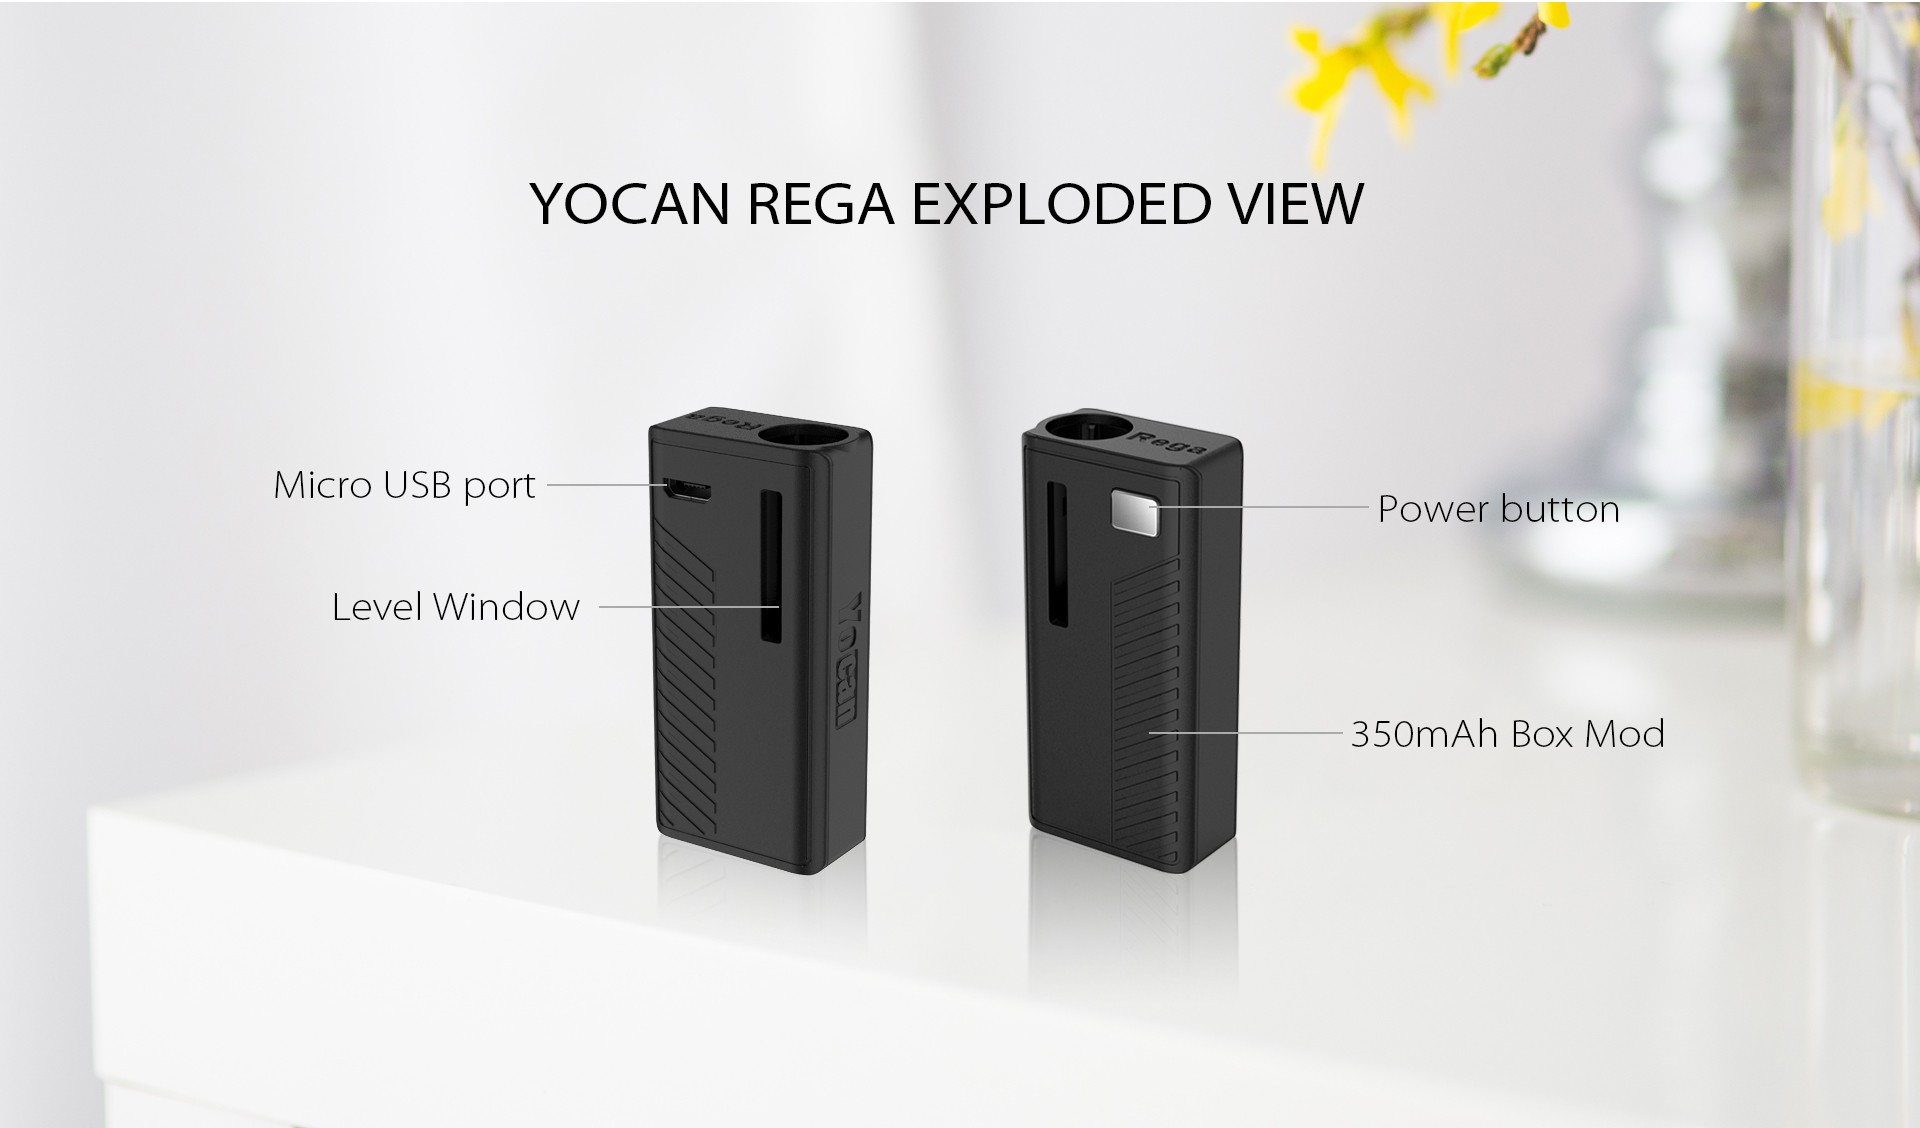 The Yocan Rega Box Mod Battery Exploded view.